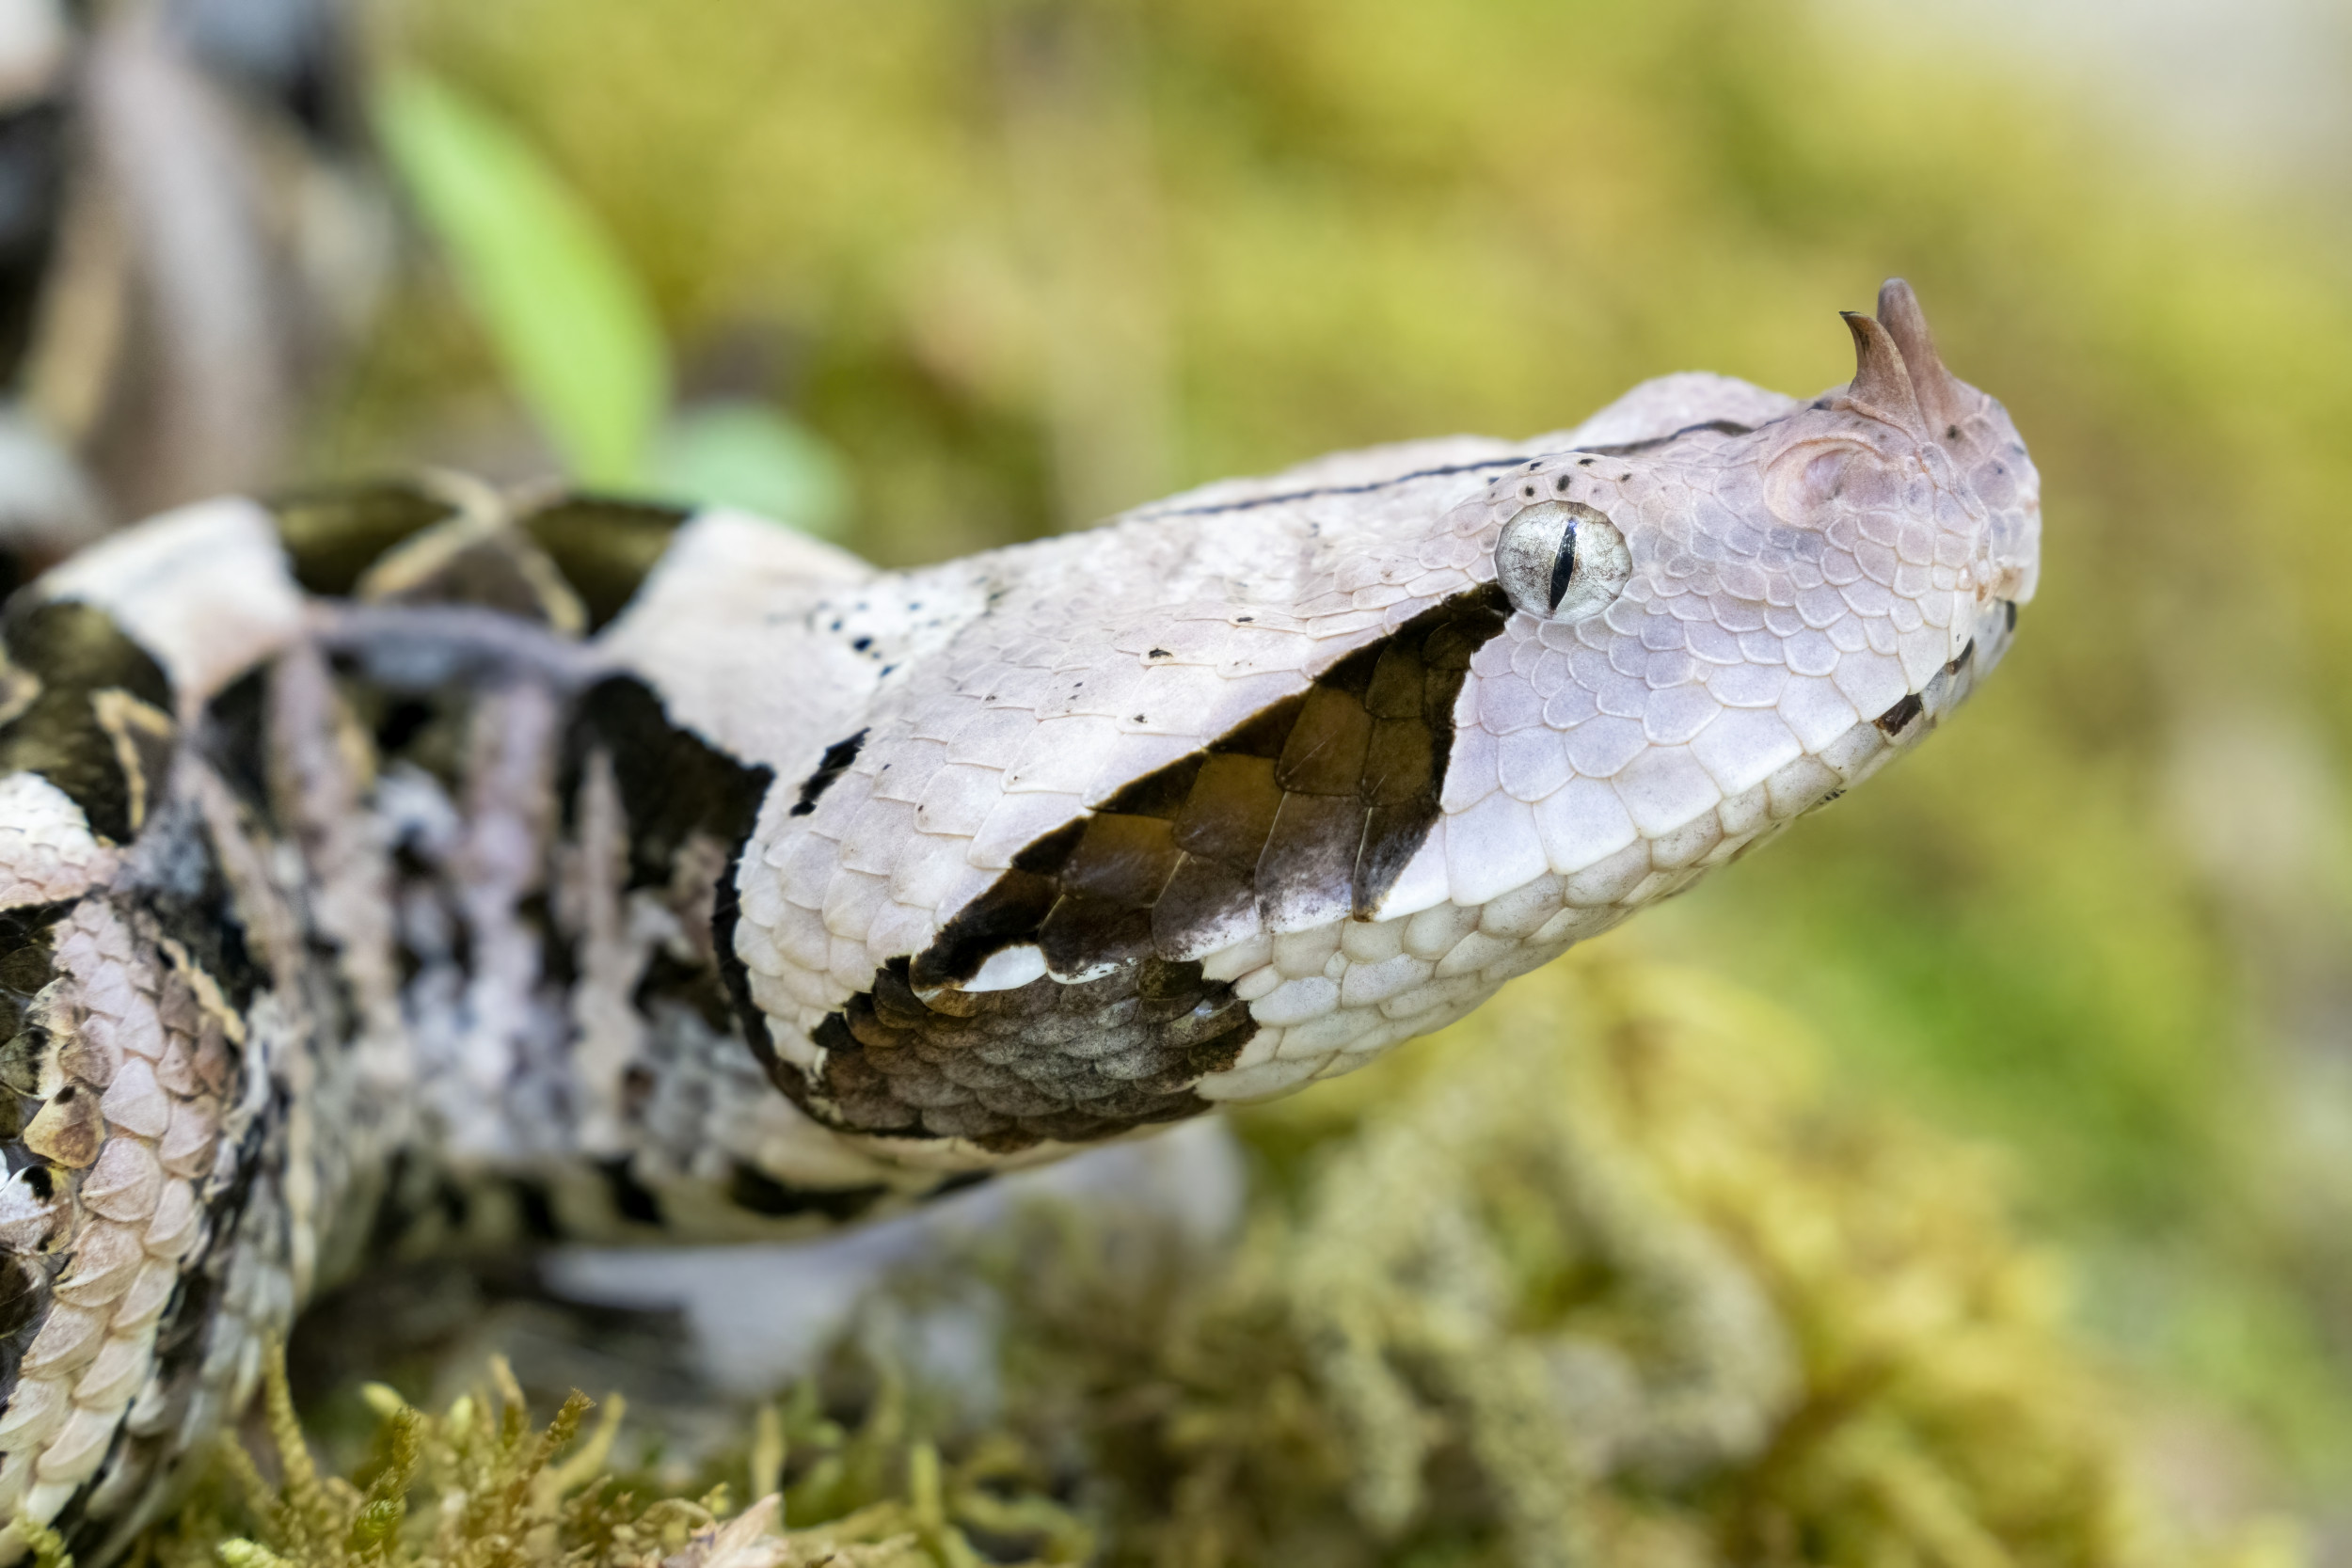 most poisonous snake bites